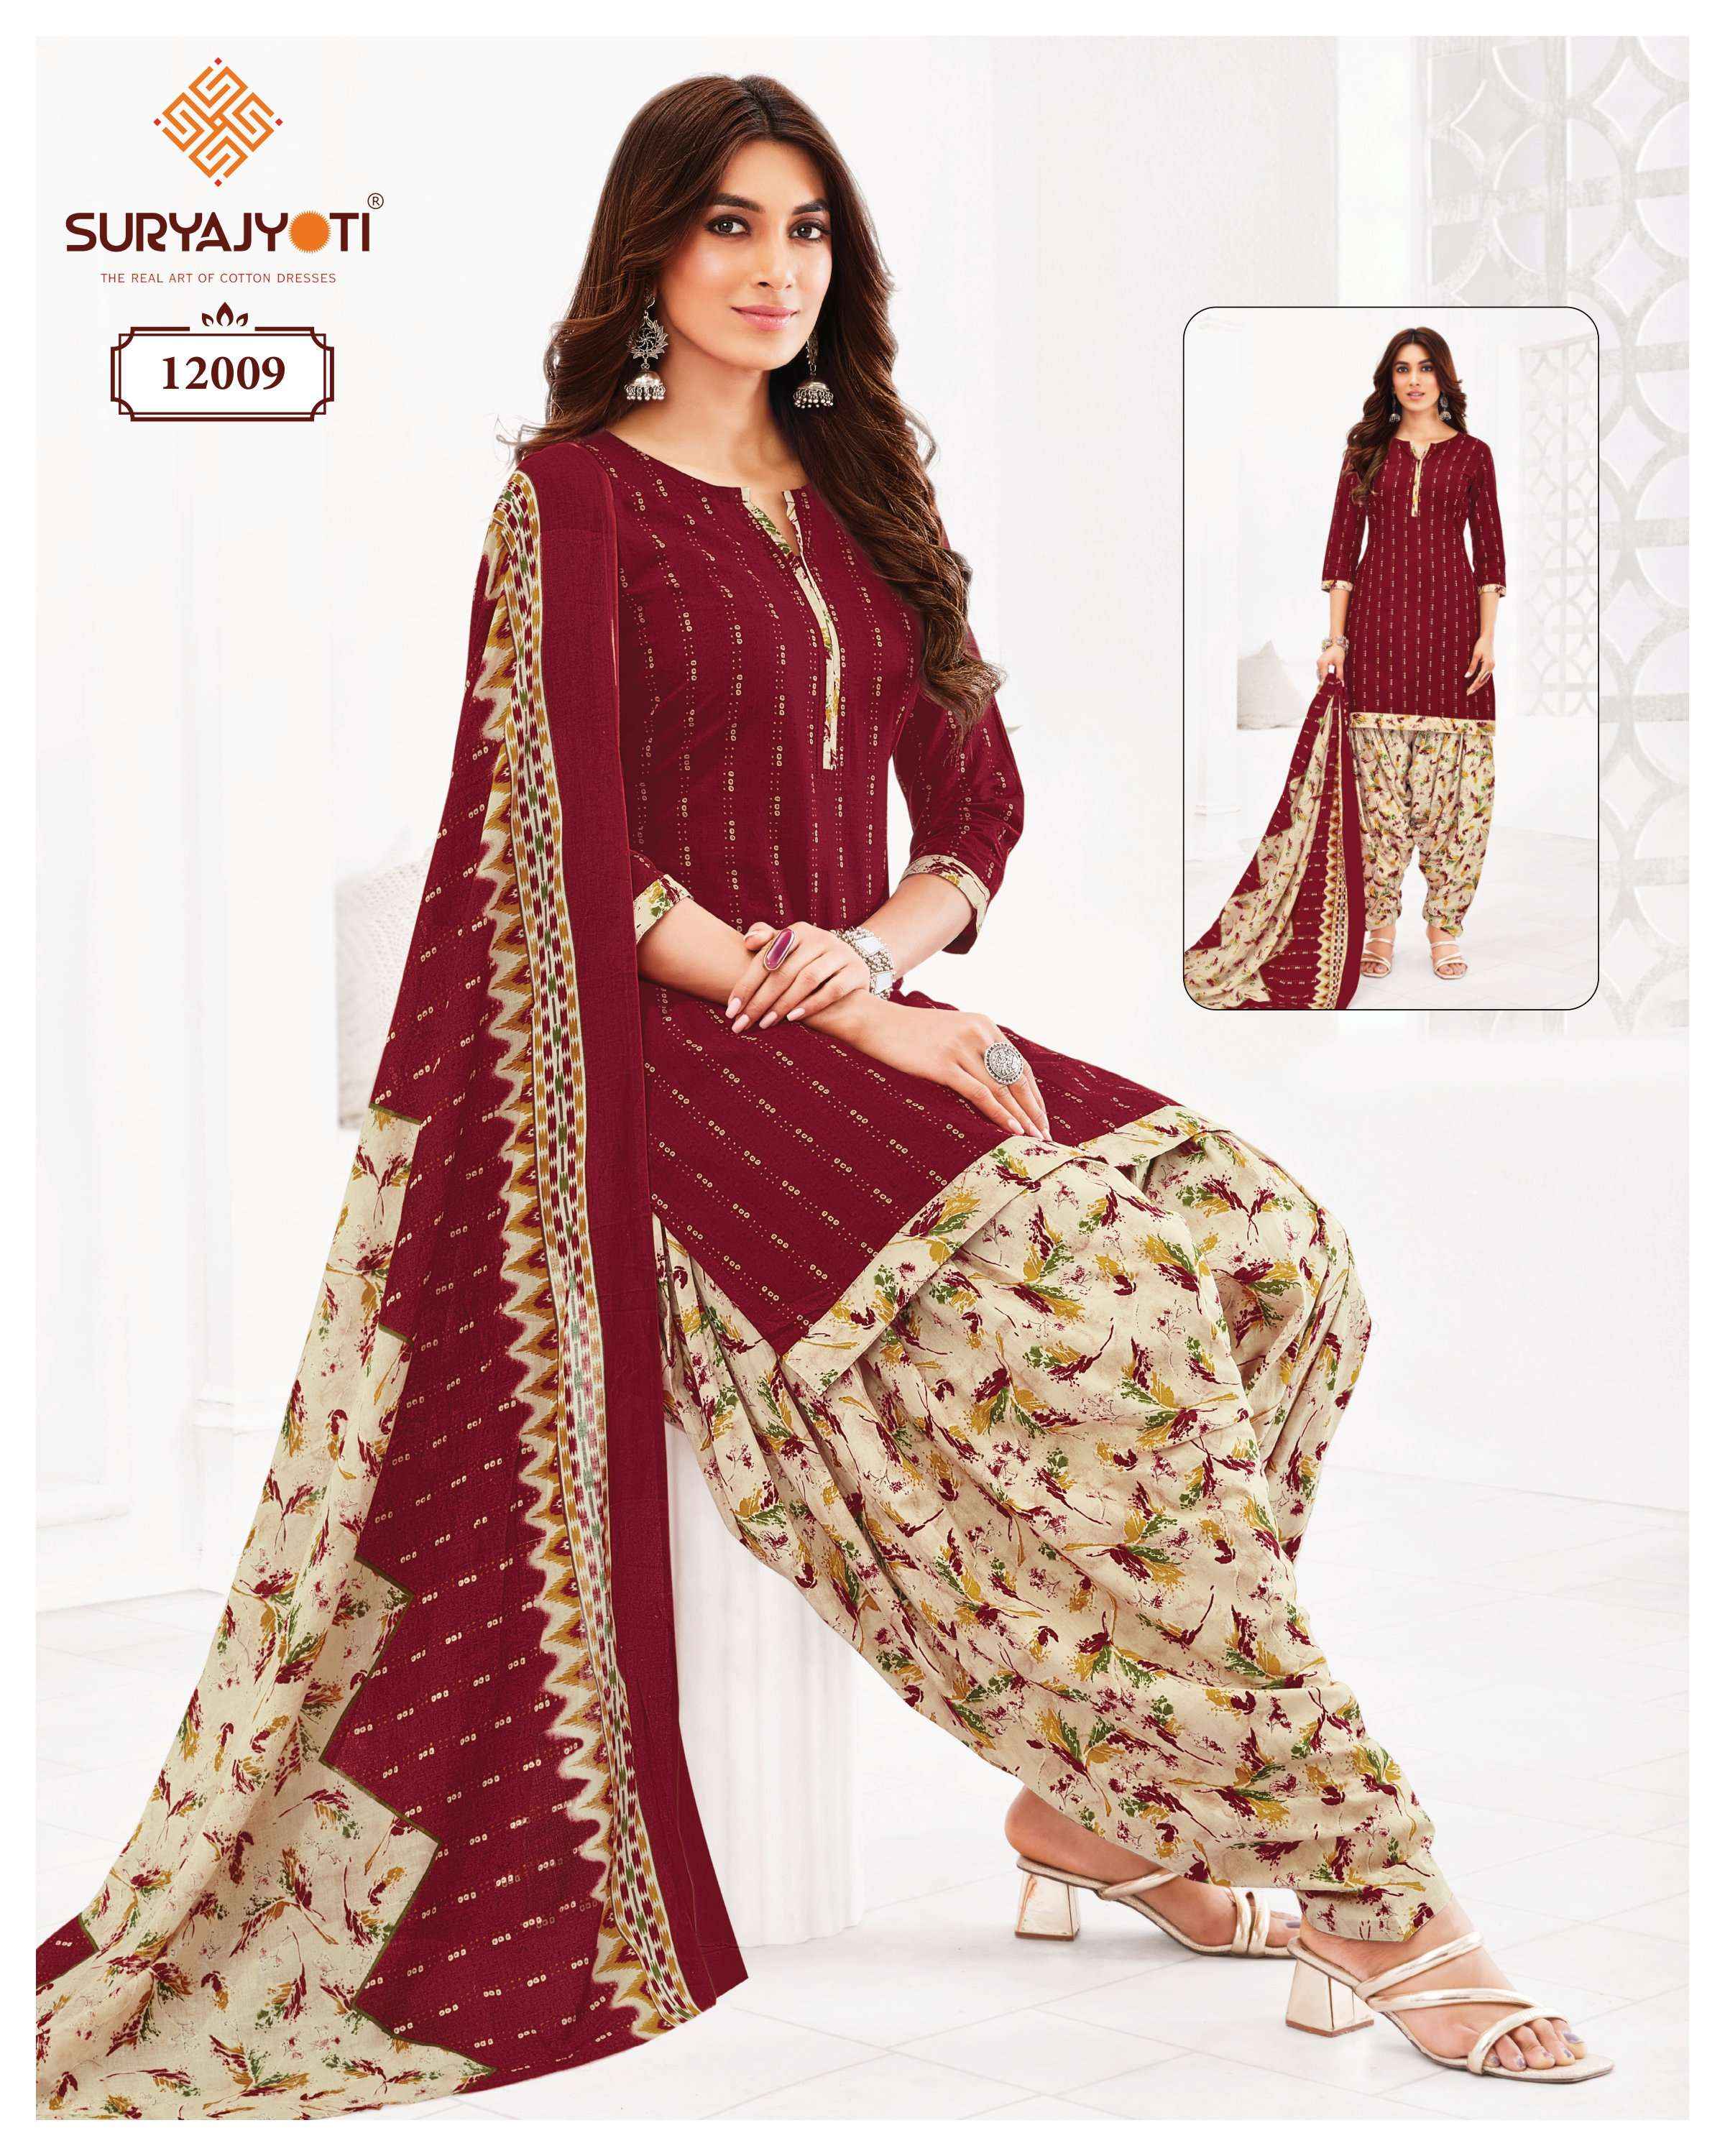 Suryajyoti Trendy Patiyala Vol 12 Cotton Dress Material 20 pcs Catalogue